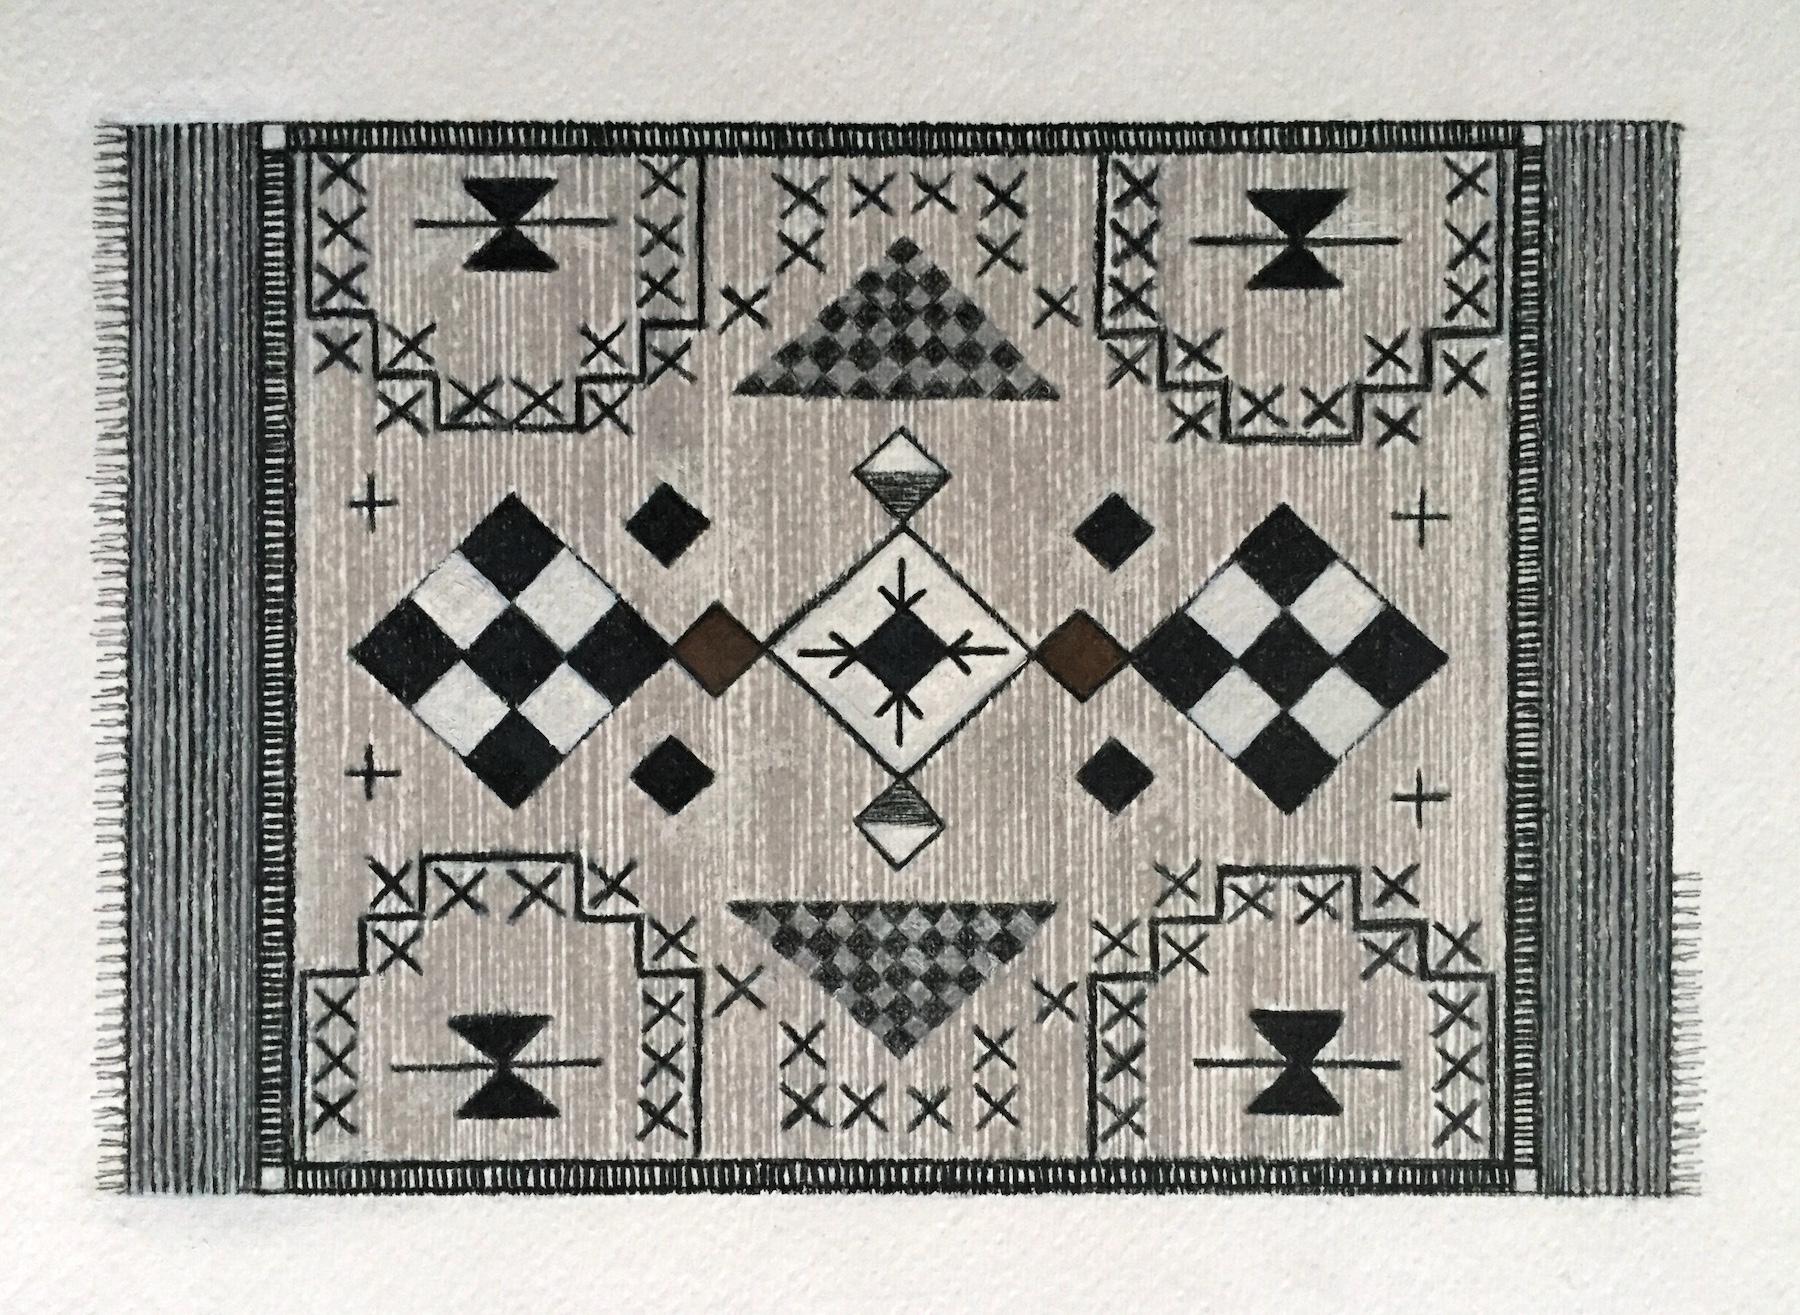 Magic Carpet Ride 3 (9"x12" Navajo Rug, Geometric Pattern, Black, White, Brown)